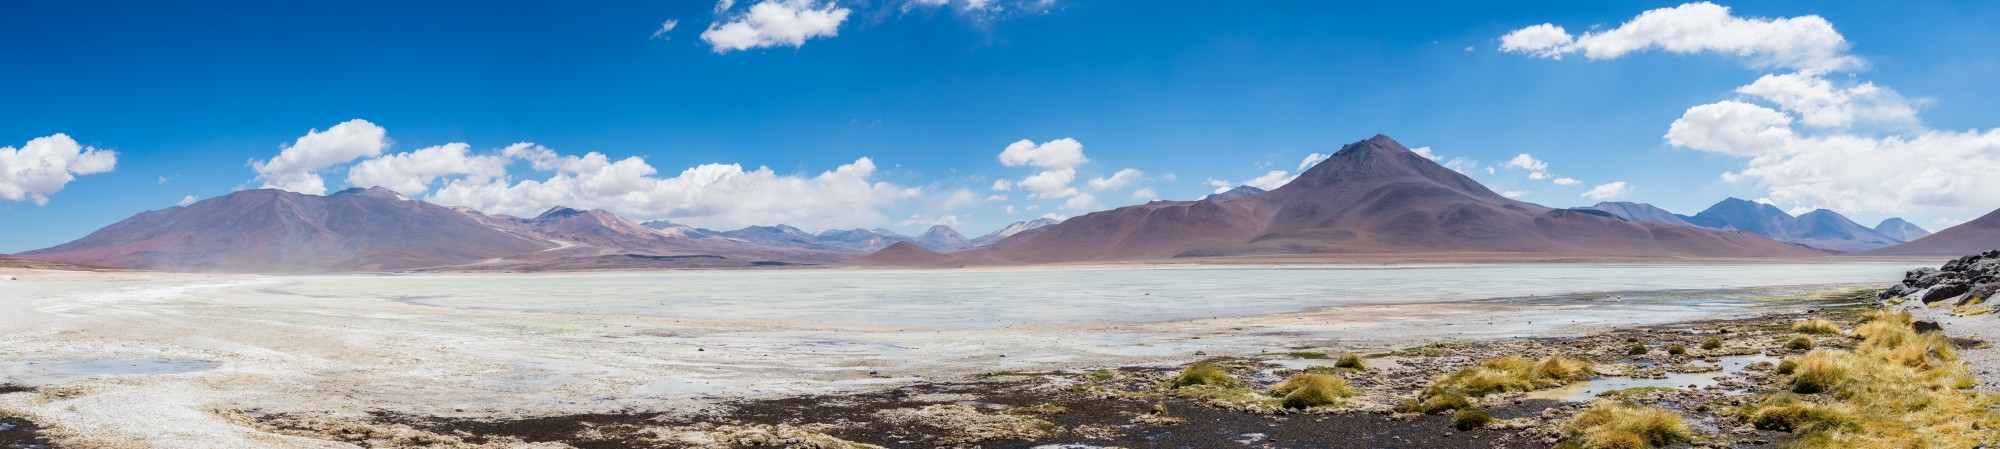 Laguna Blanca, Bolivia, 2016-02-02, DD 30-34 PAN